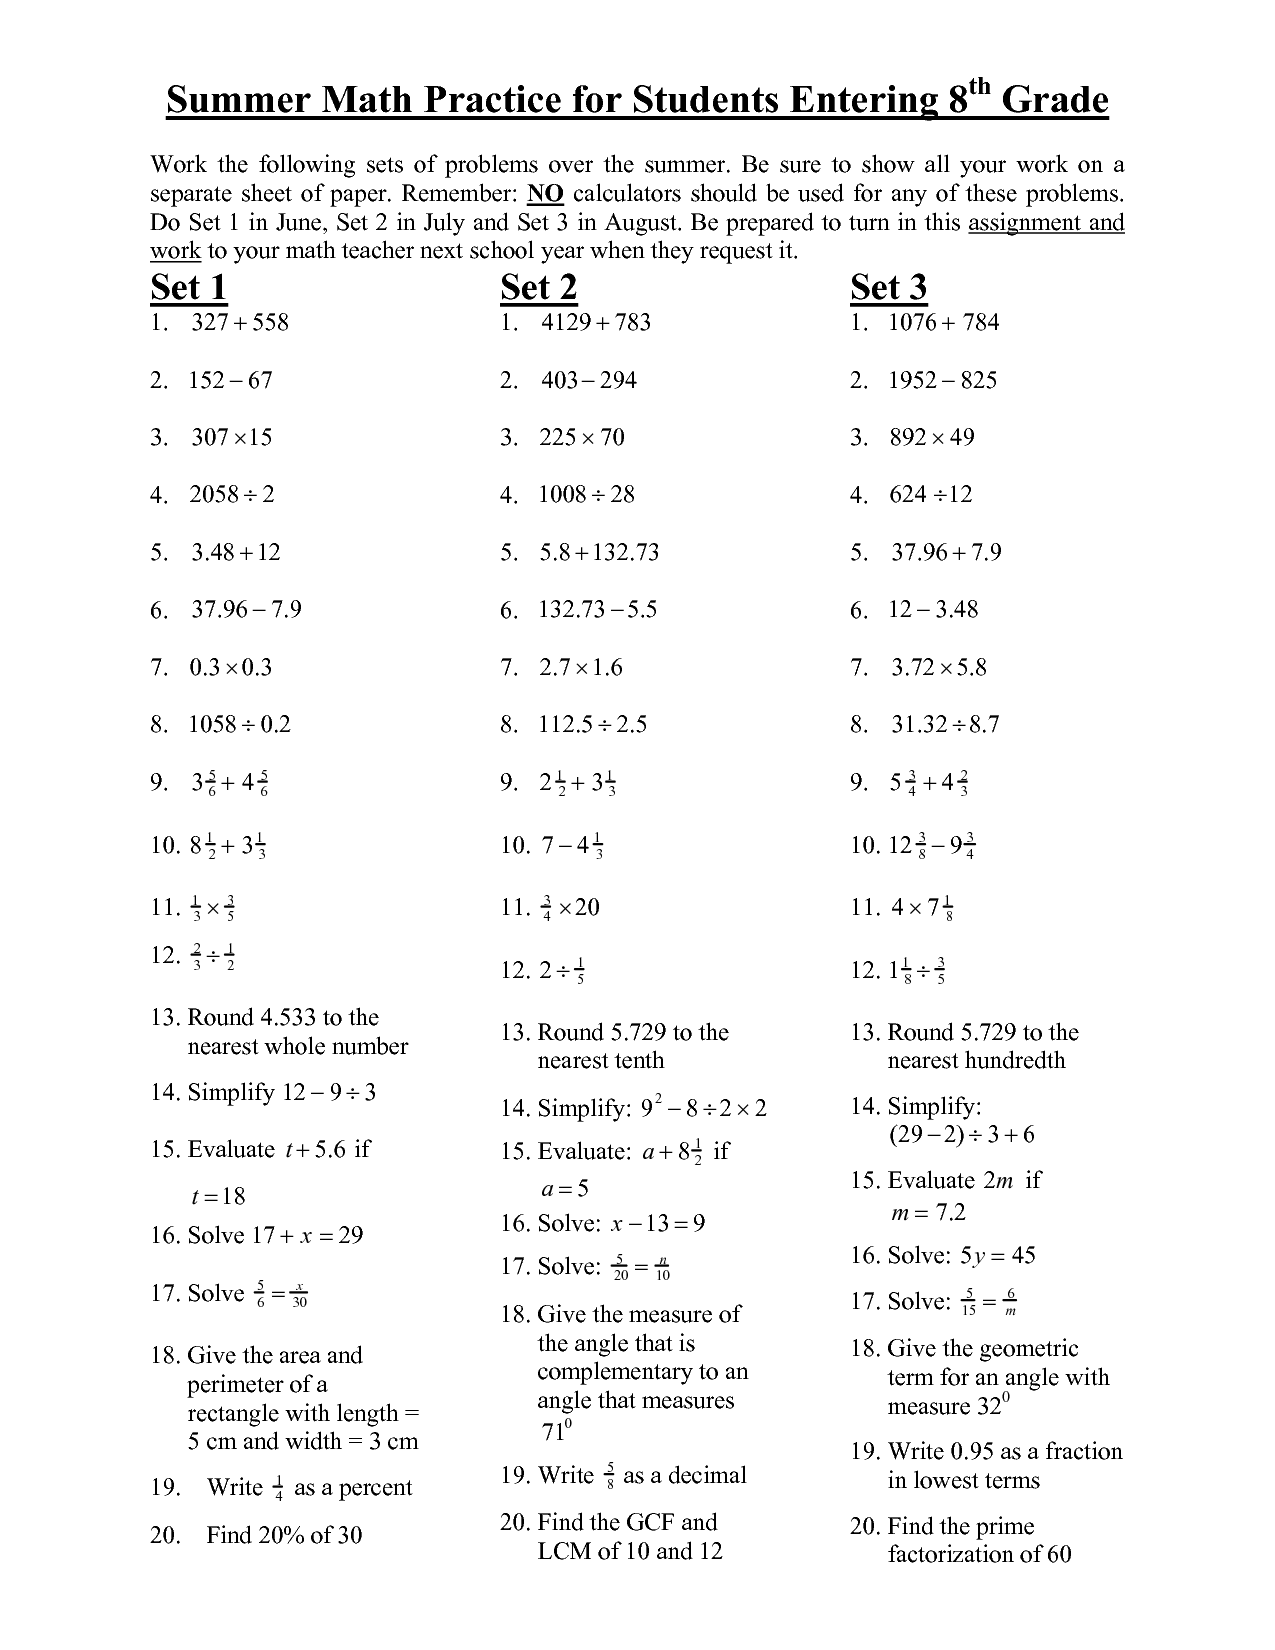 8th Grade Math Practice Problems Image